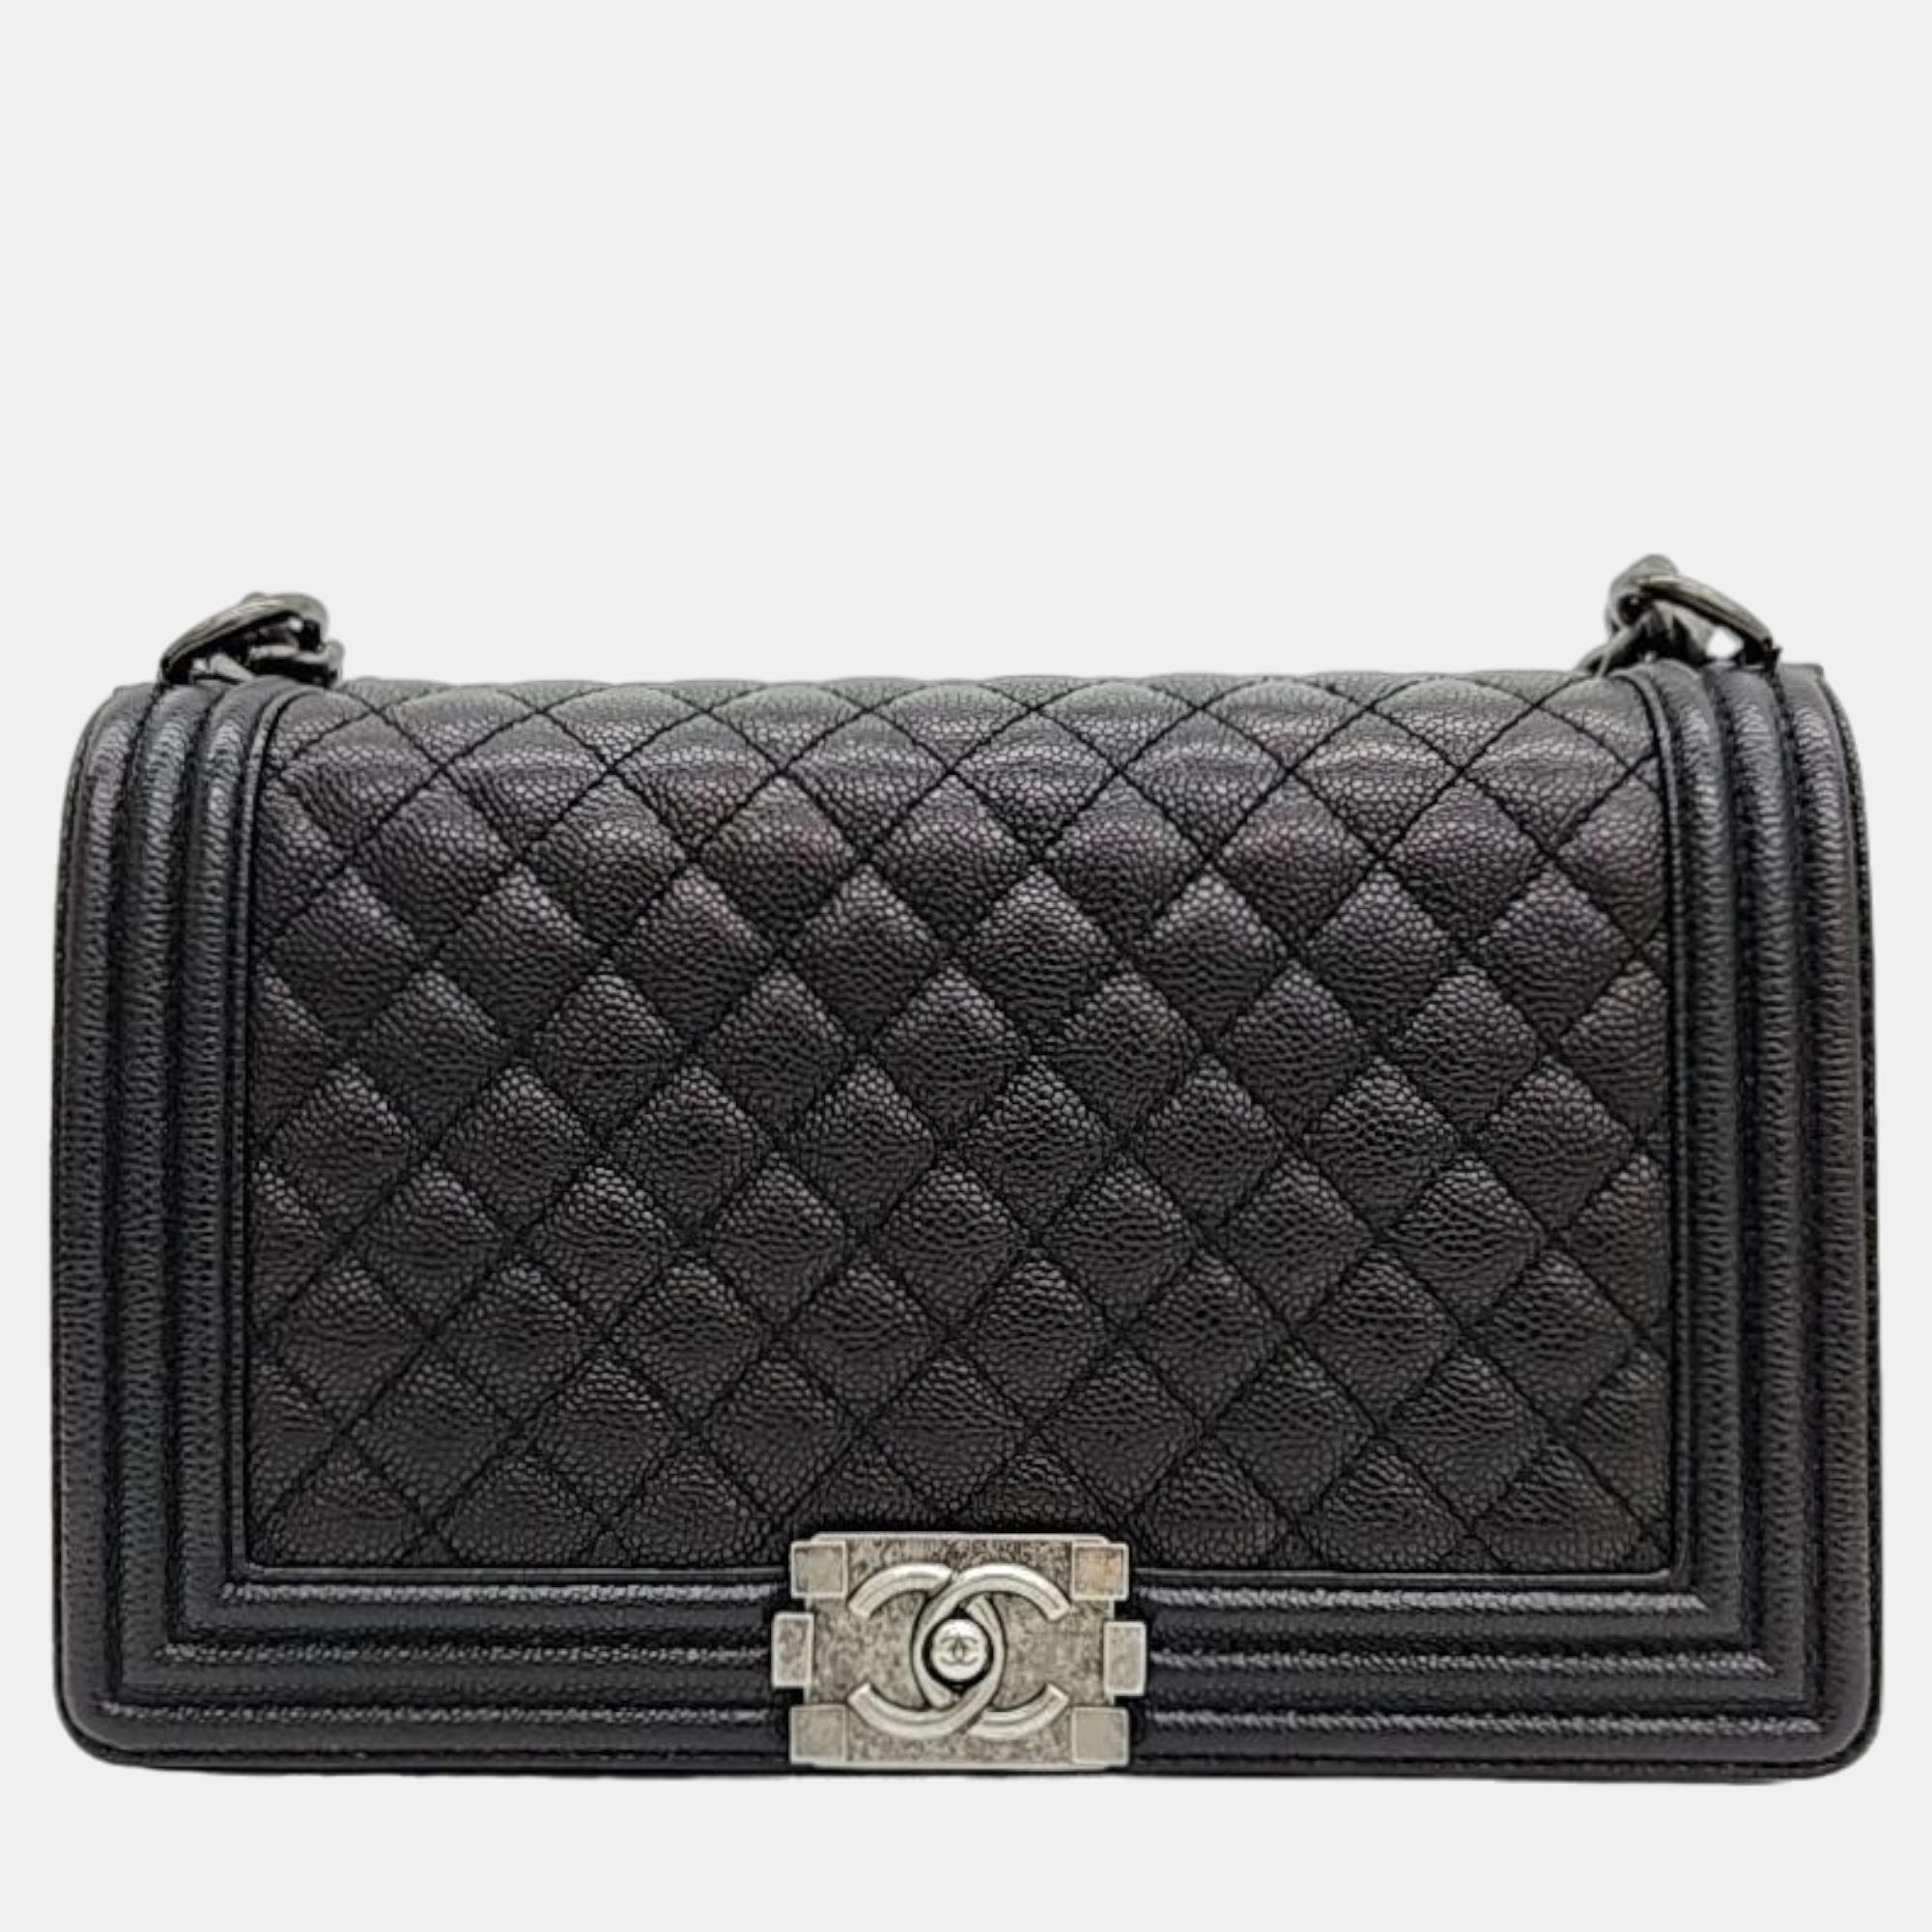 CHANEL Vintage CC Logo Caviar Leather Shopper Bag Black